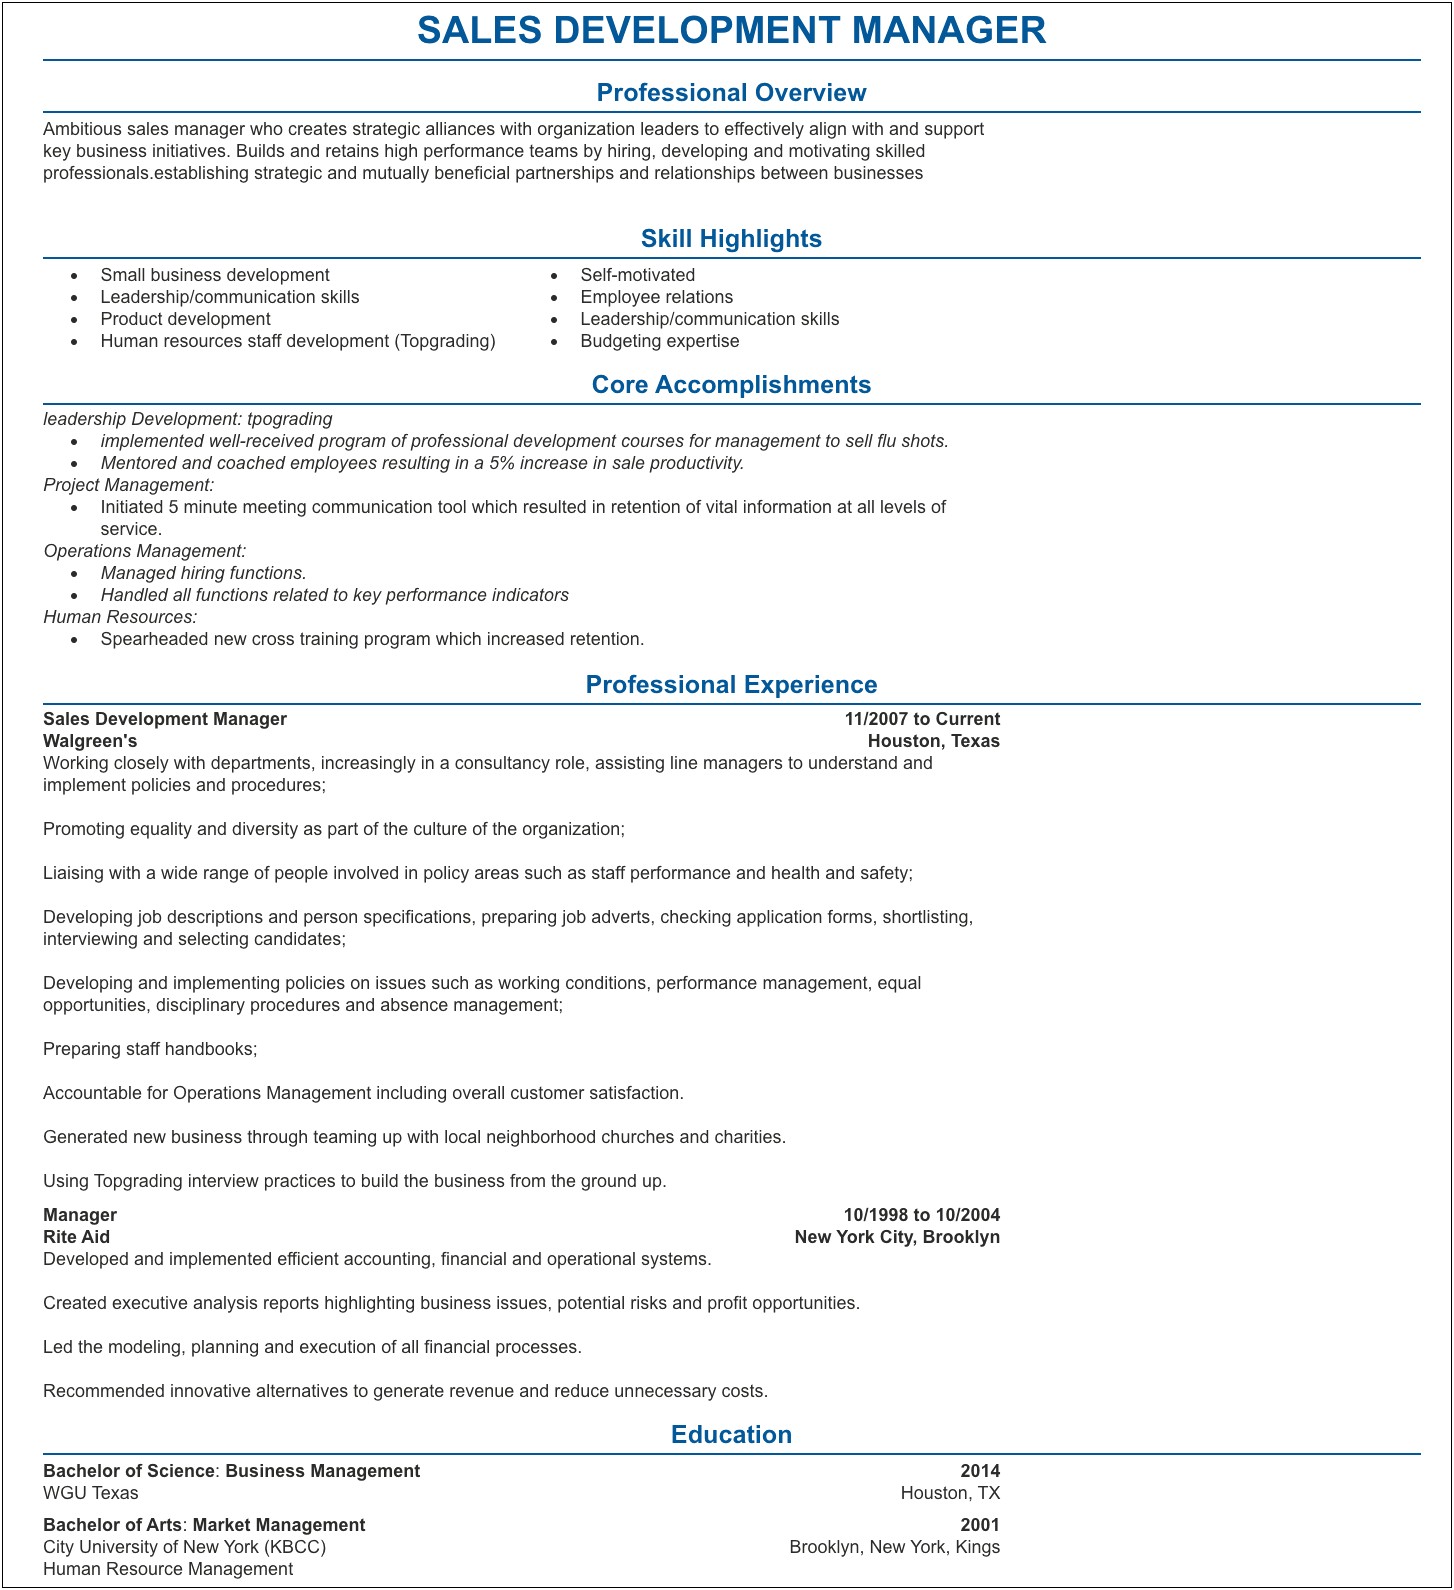 Resume Based On Job Description